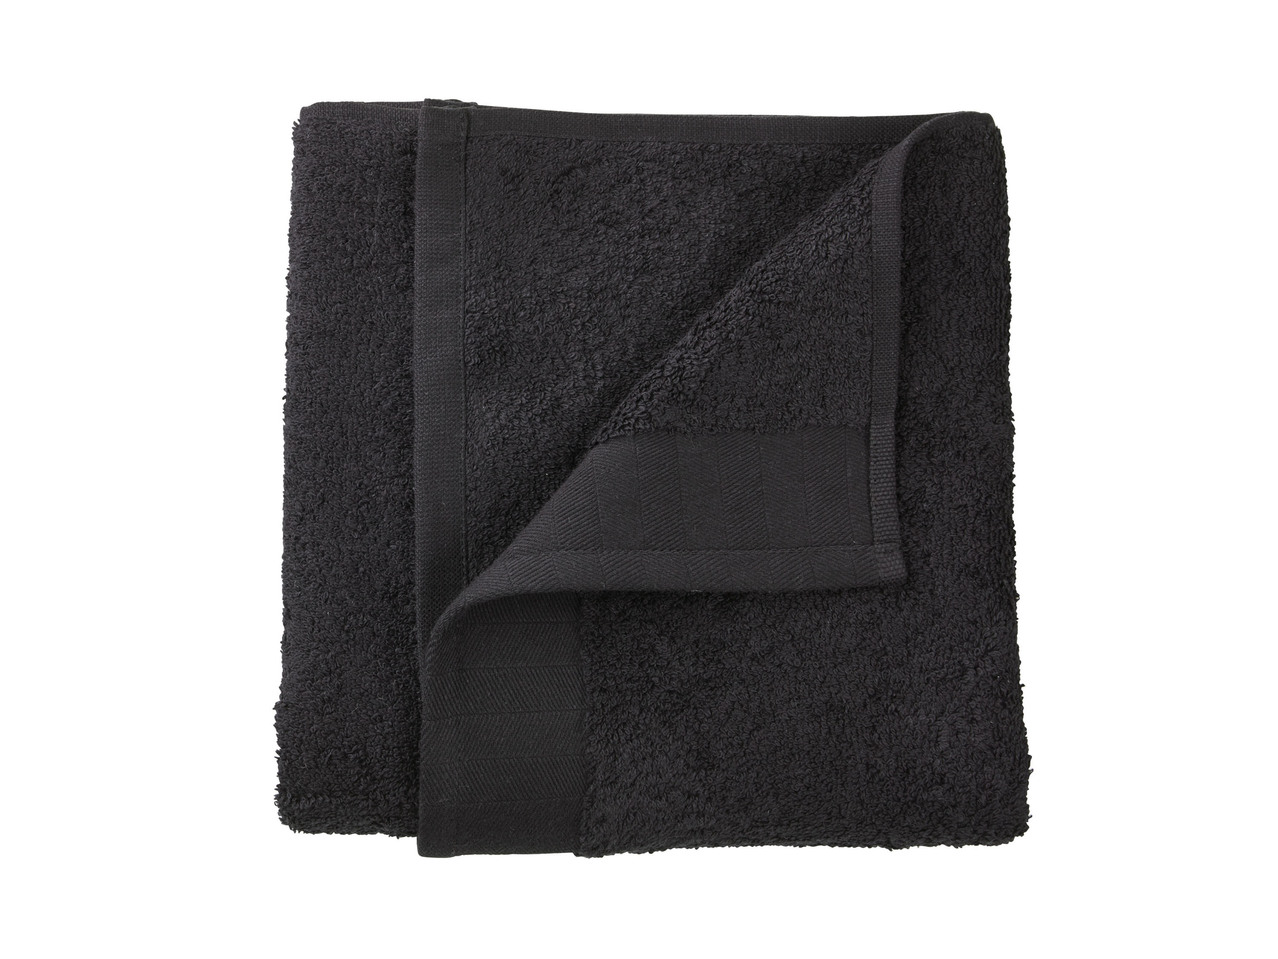 Hand Towels 50x100cm, 2 pieces or Bath Sheet 100x150cm